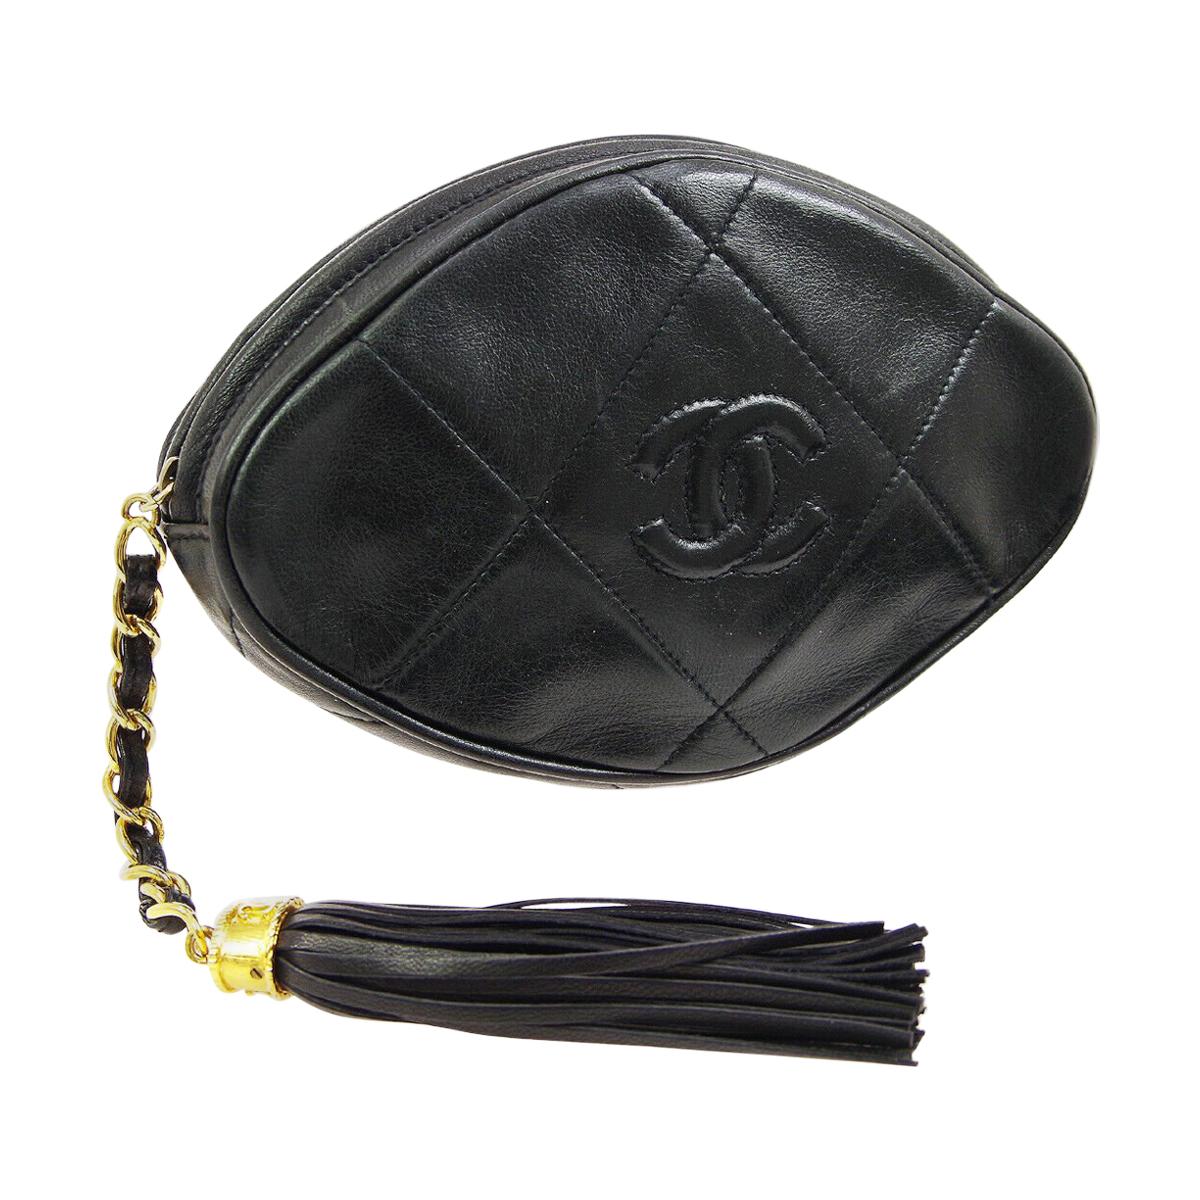 Chanel Black Leather Tassel Small Mini Evening Clutch Bag